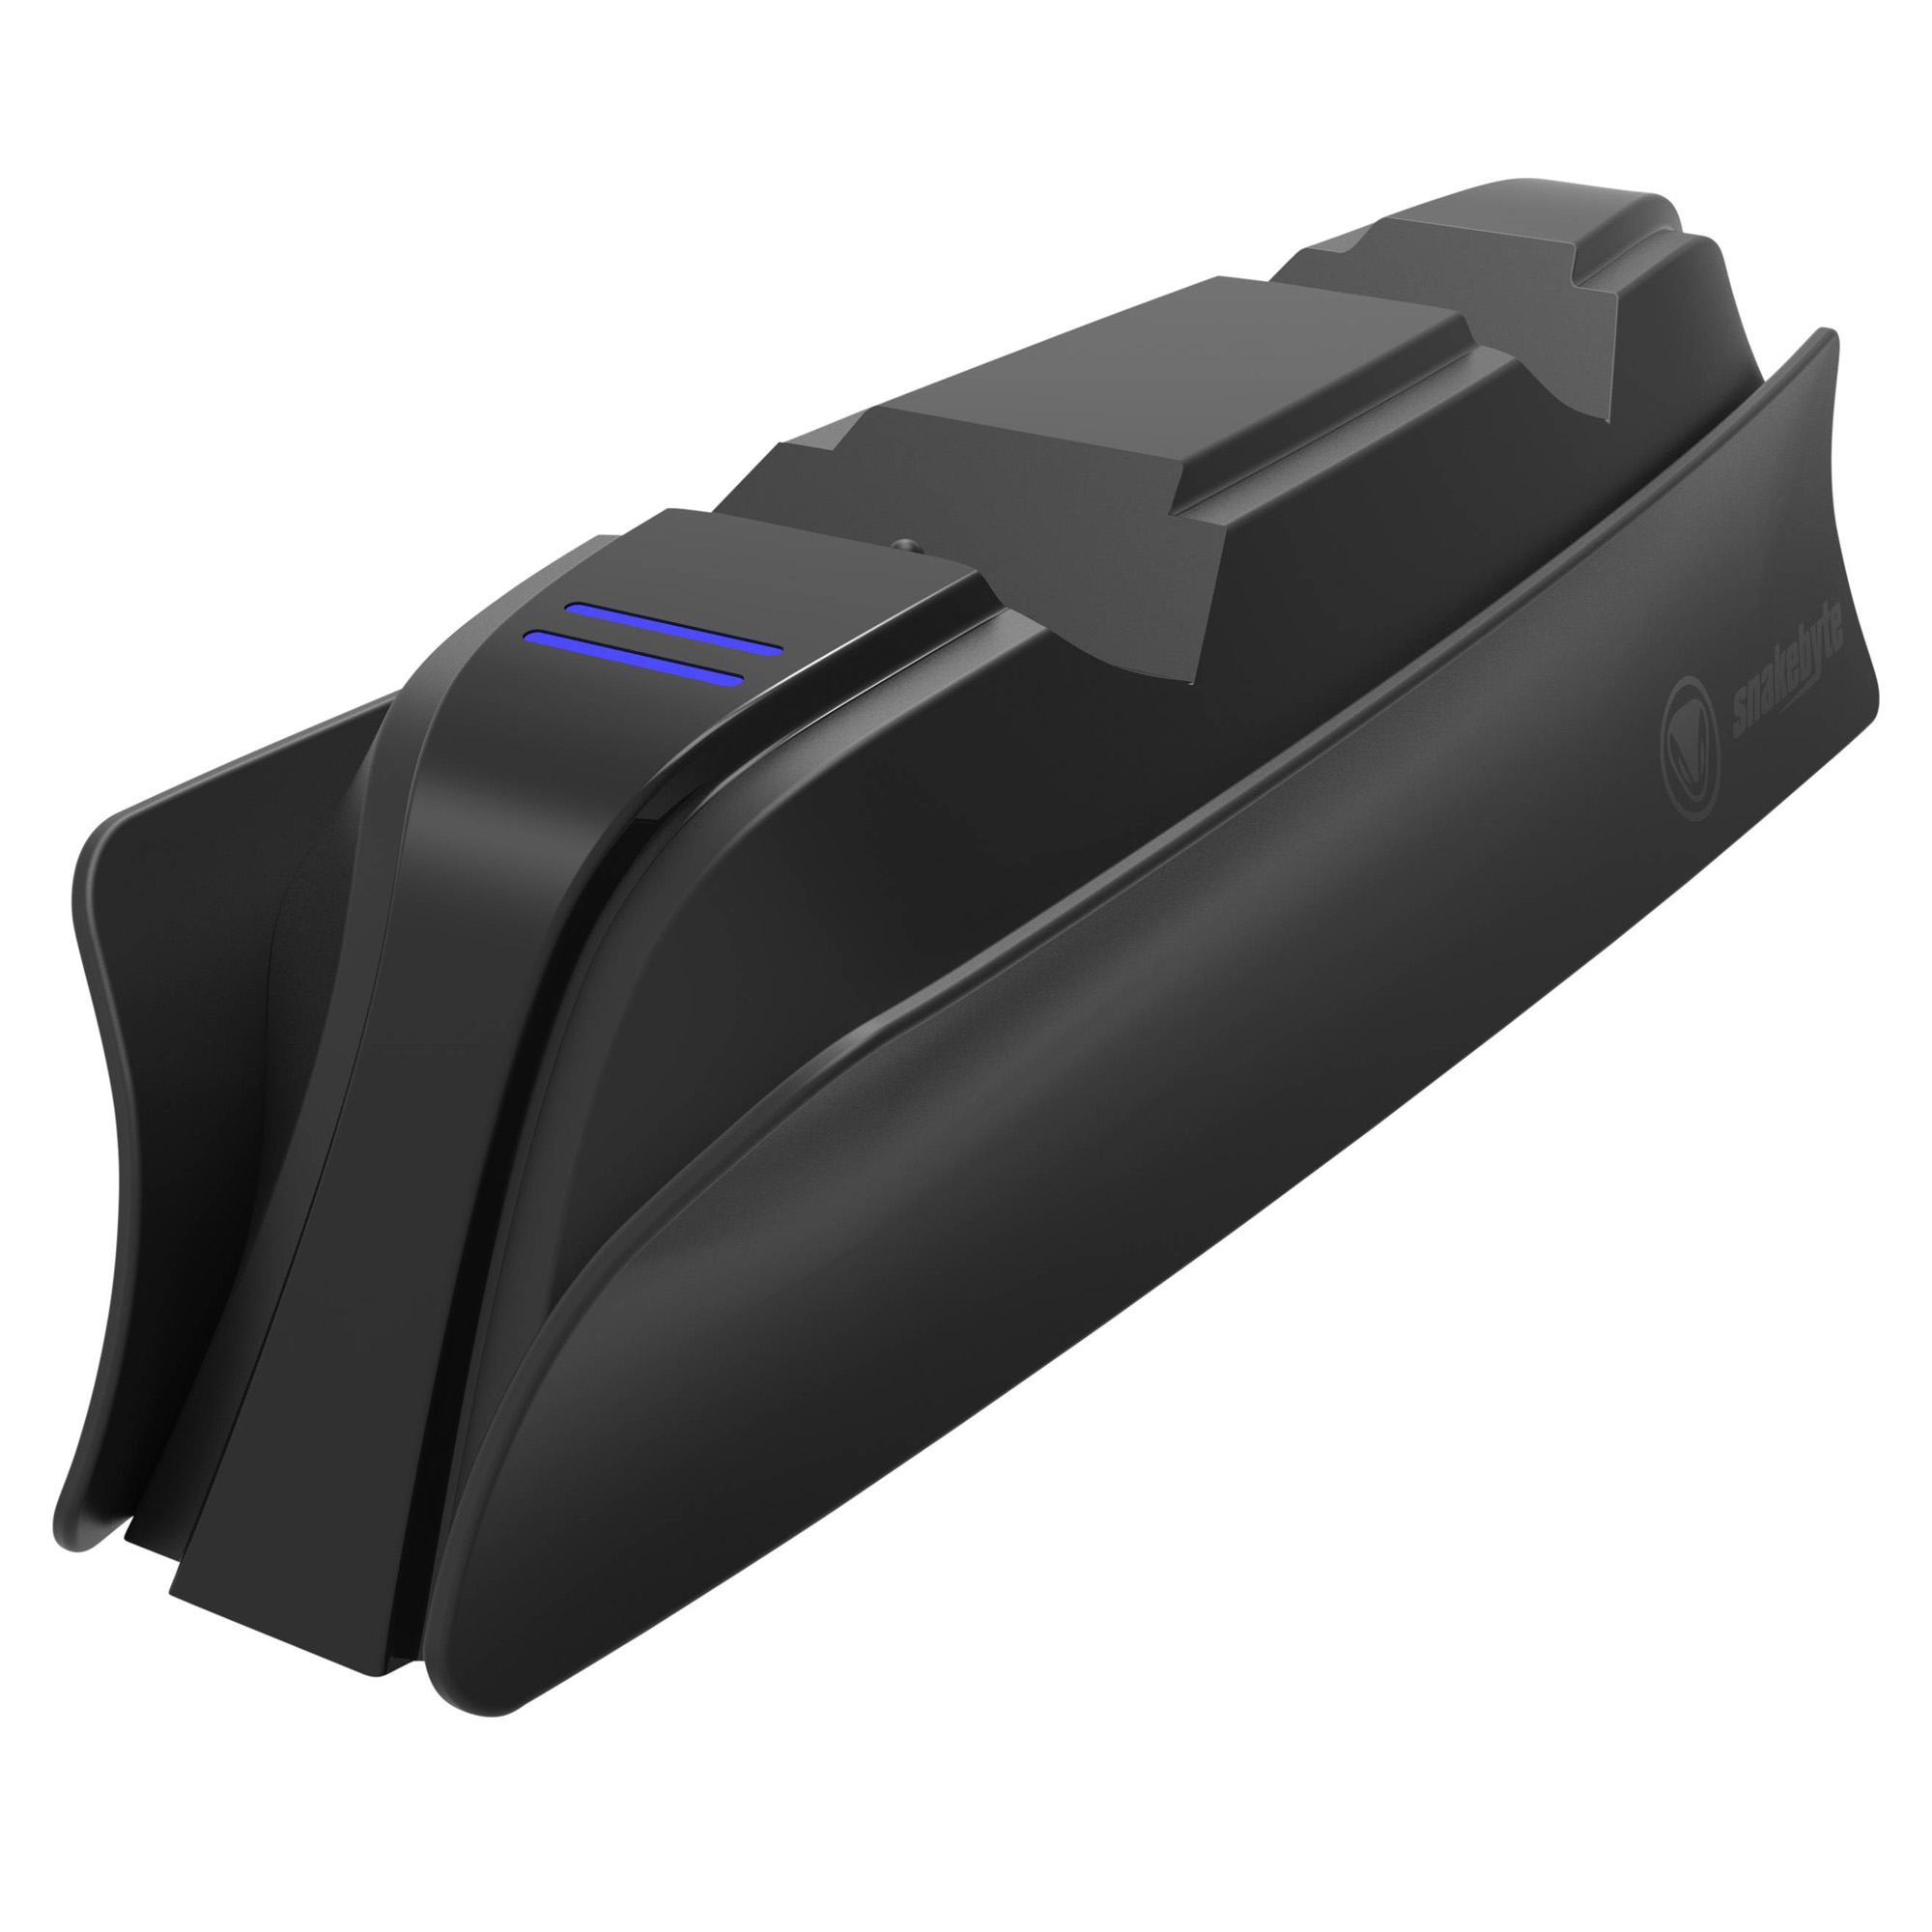 Stanica za punjenje kontrolera Snakebyte PS5 Twin Charge 5 Black